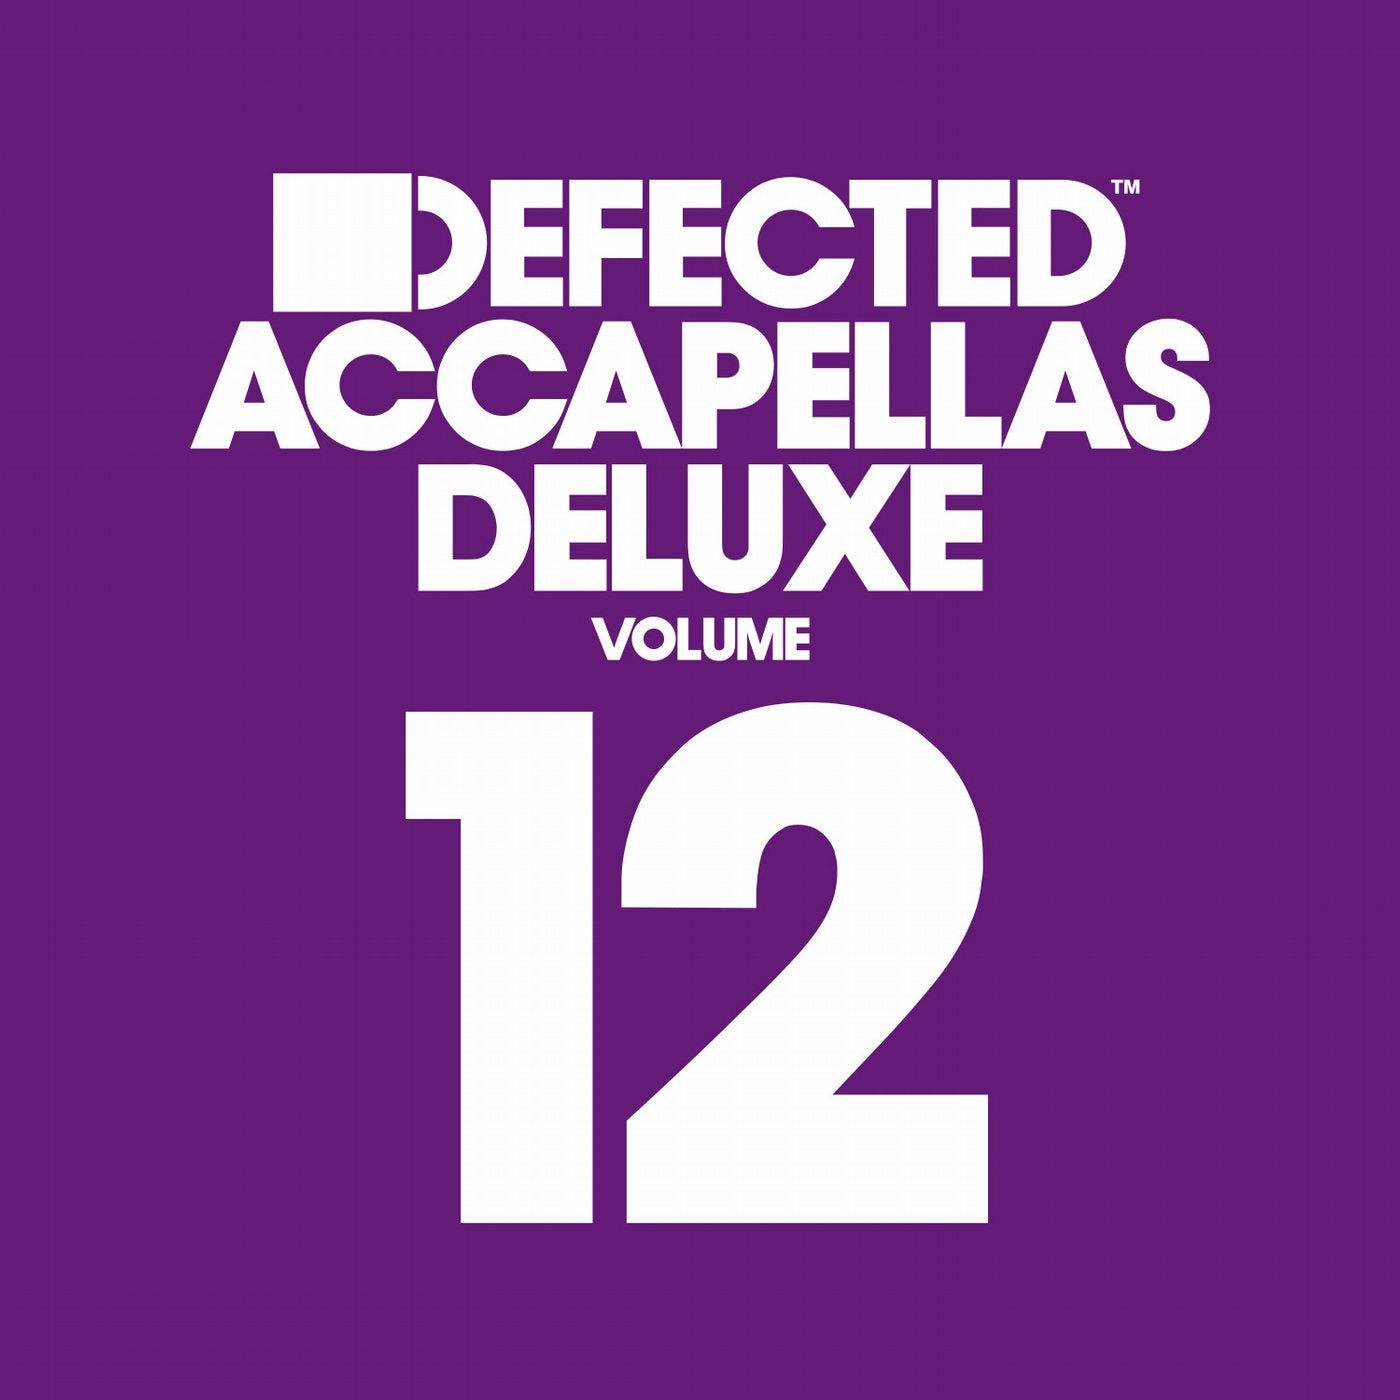 Defected Accapellas Deluxe Volume 12